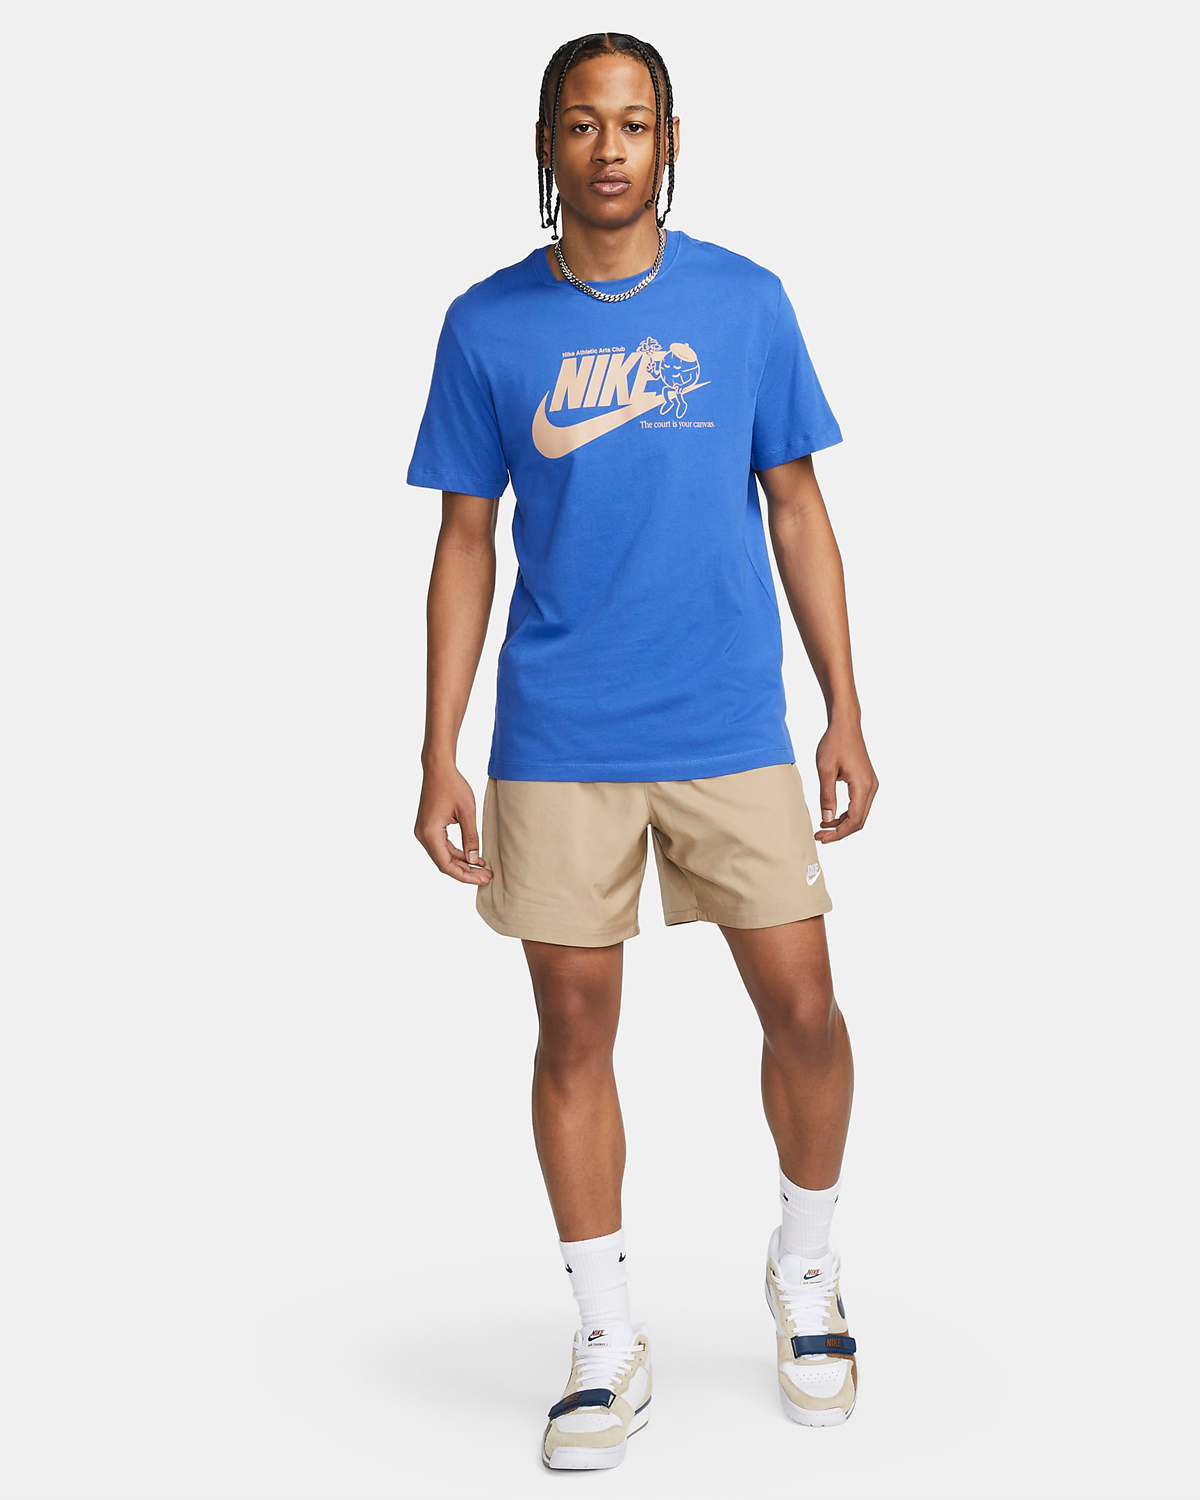 Nike-Sportswear-T-Shirt-Game-Royal-Outfit